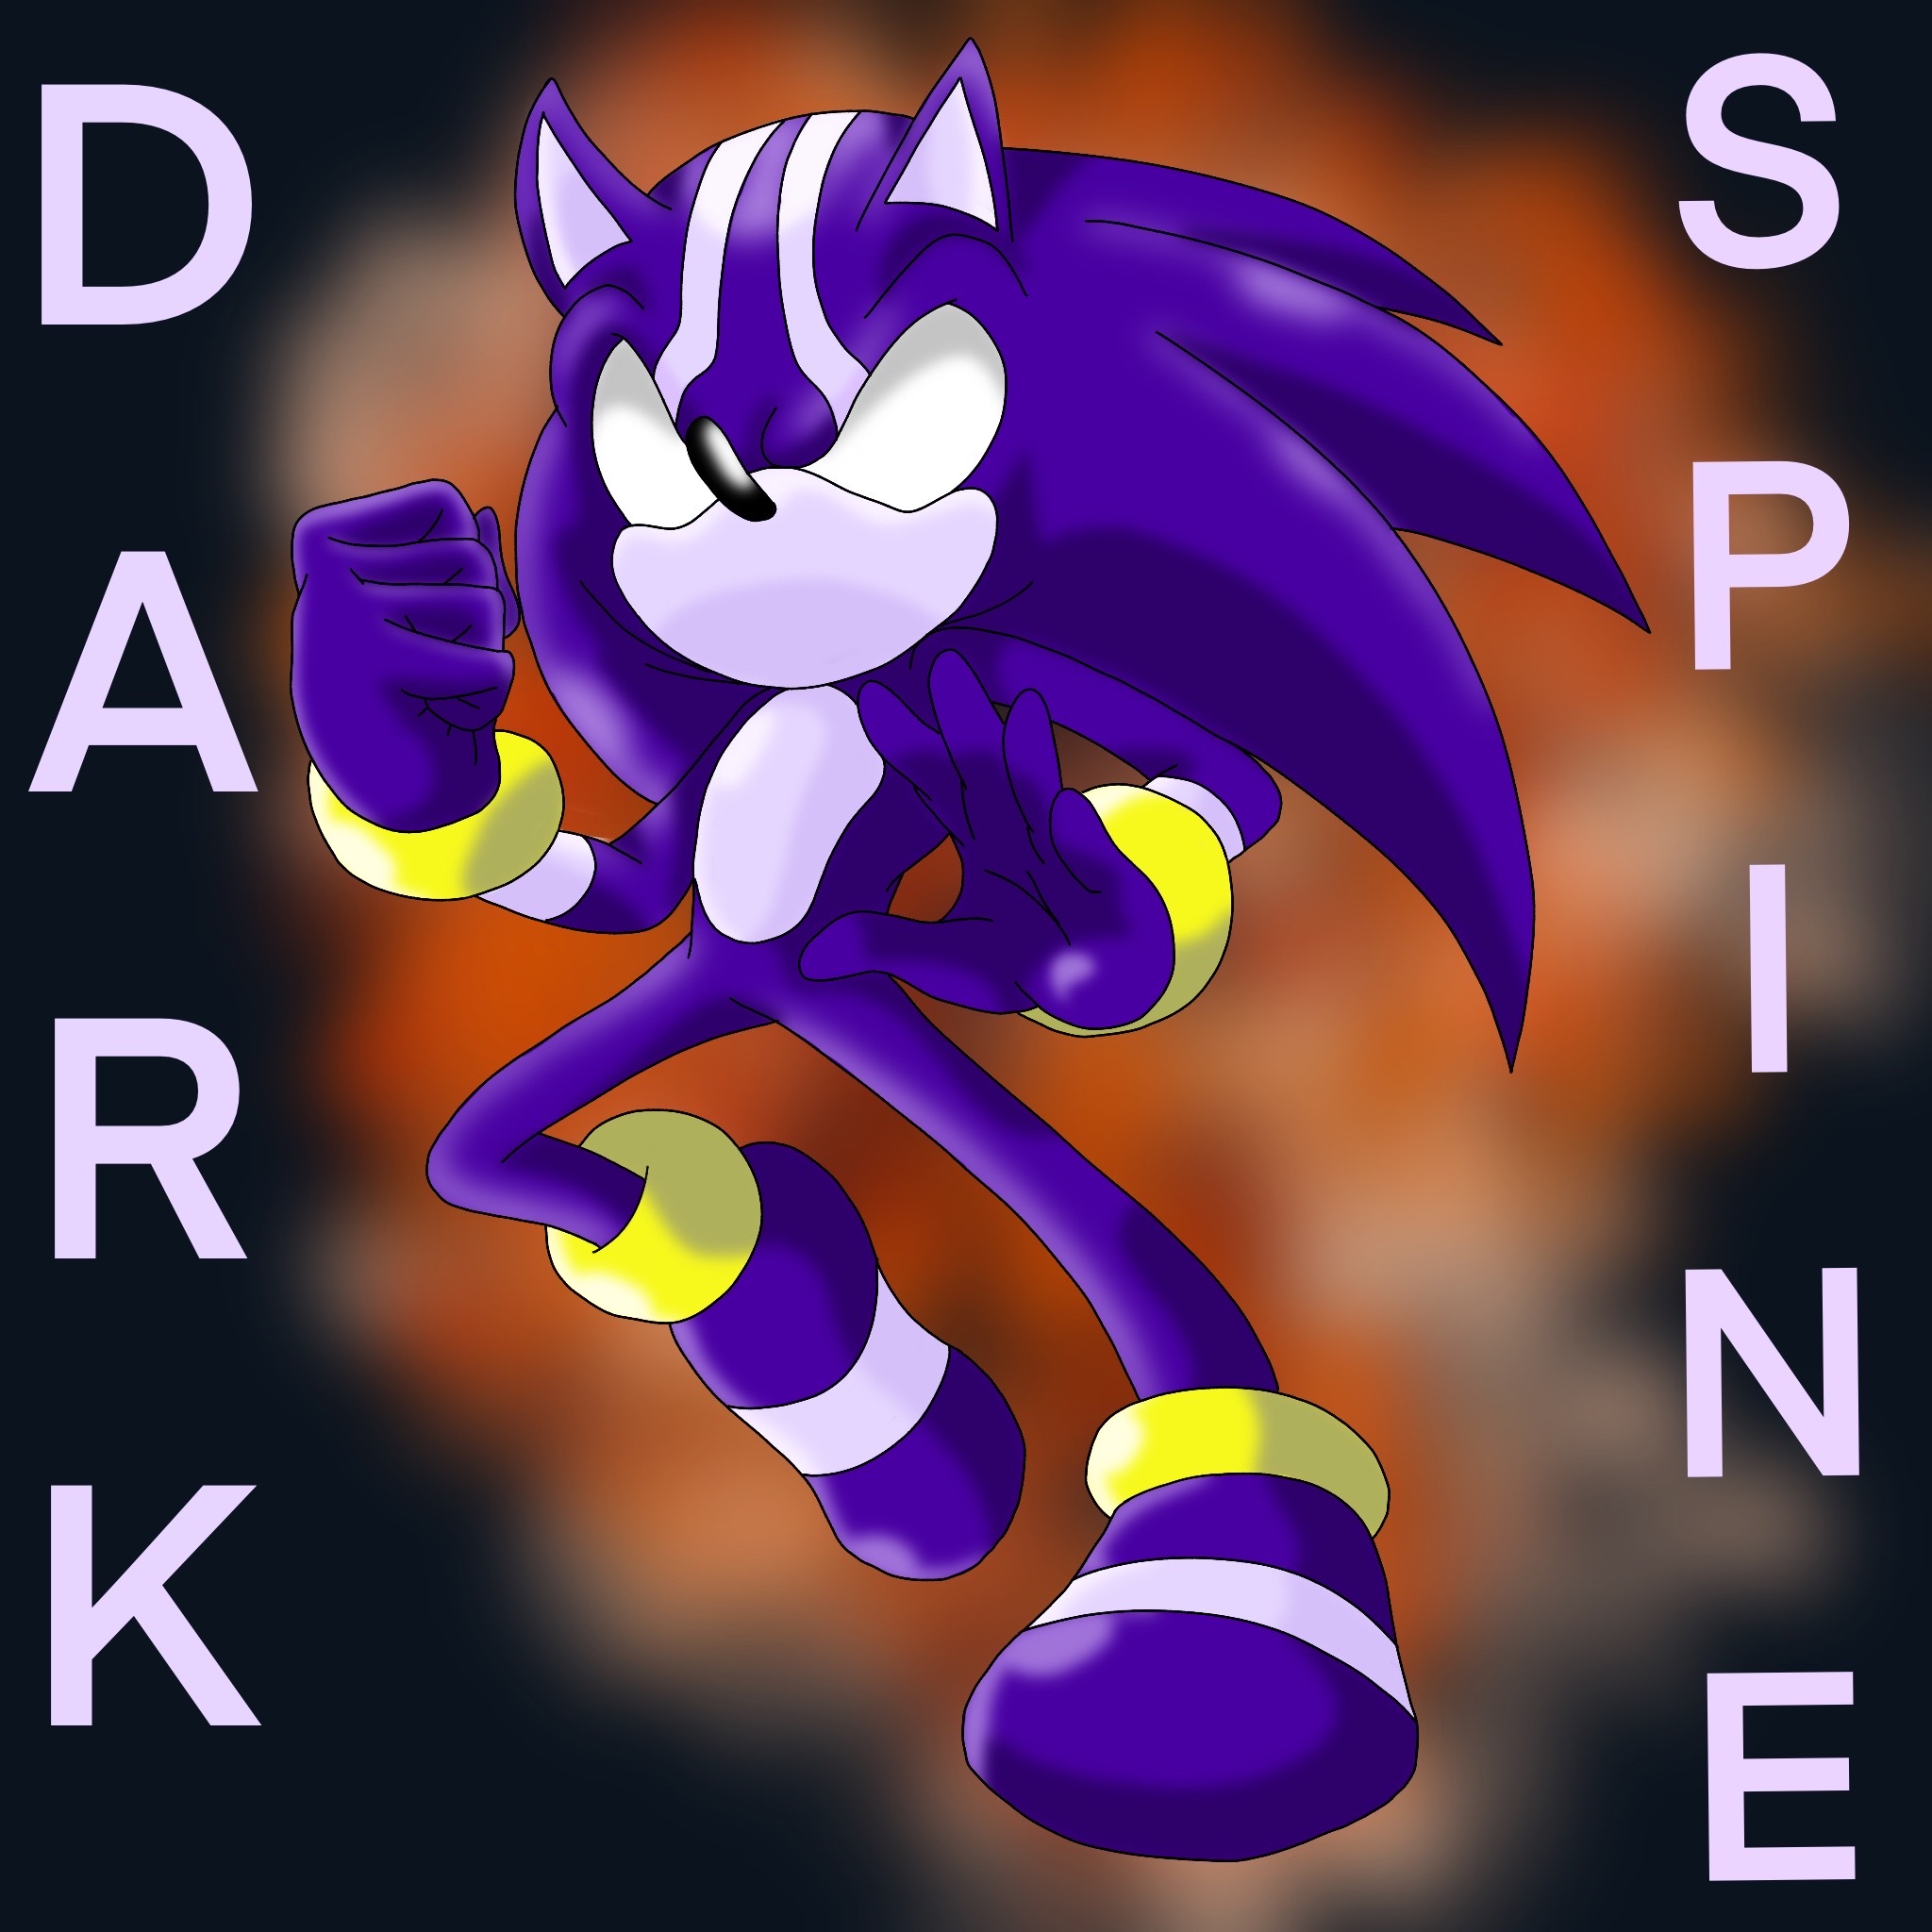 DarkSpine by Nonic Power by NonicPower on DeviantArt